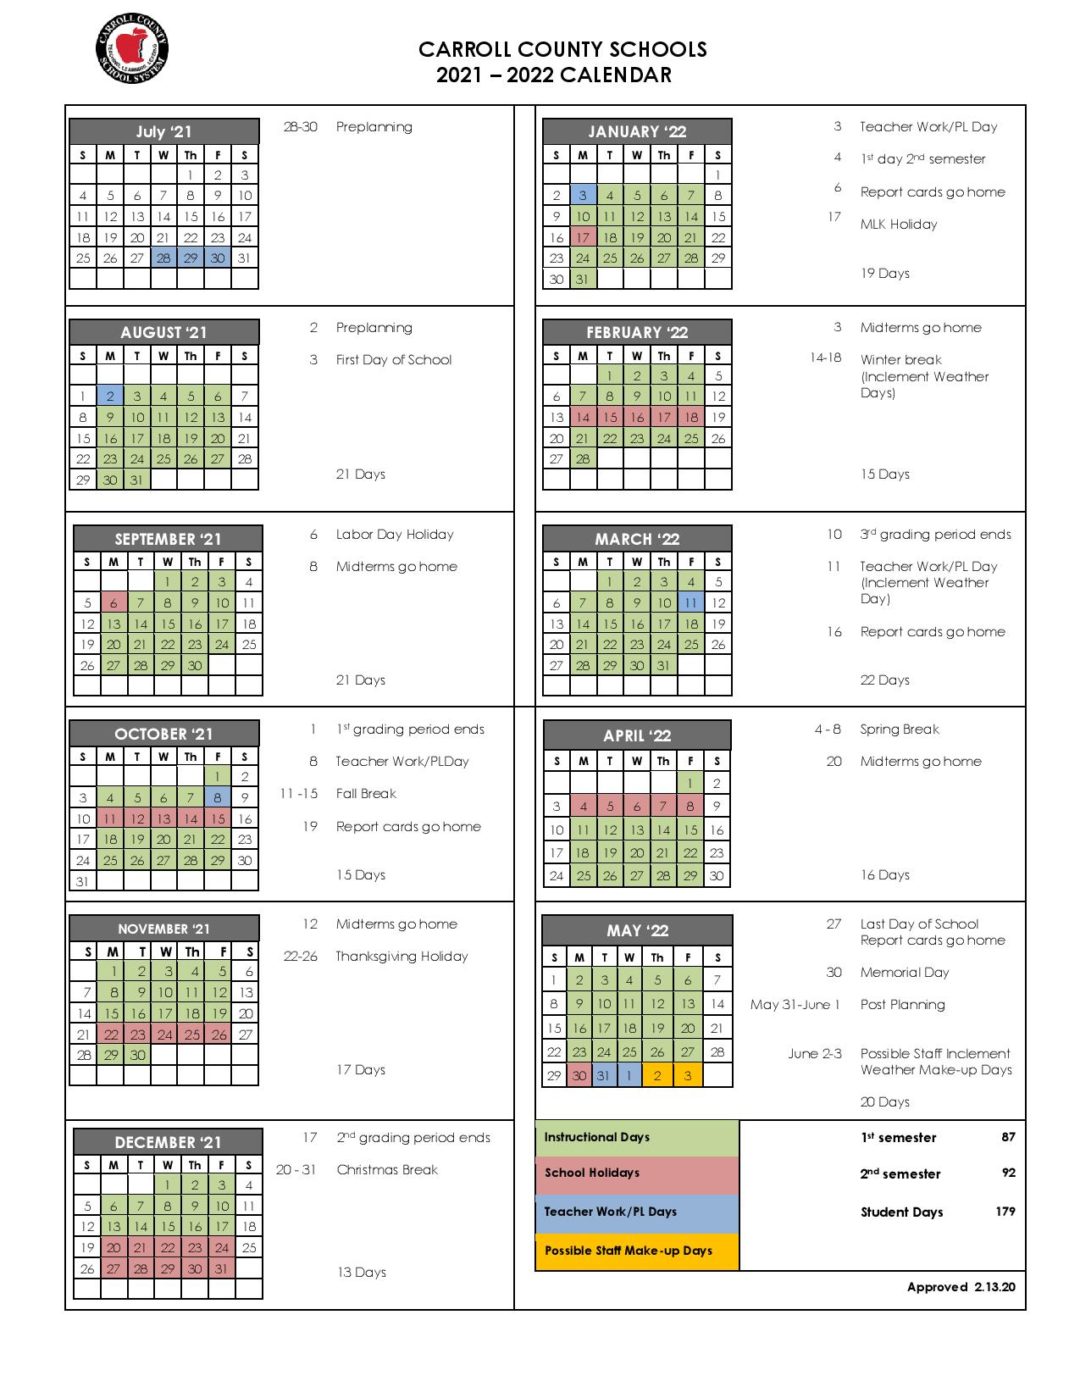 Carroll County Schools Calendar 20212022 in PDF